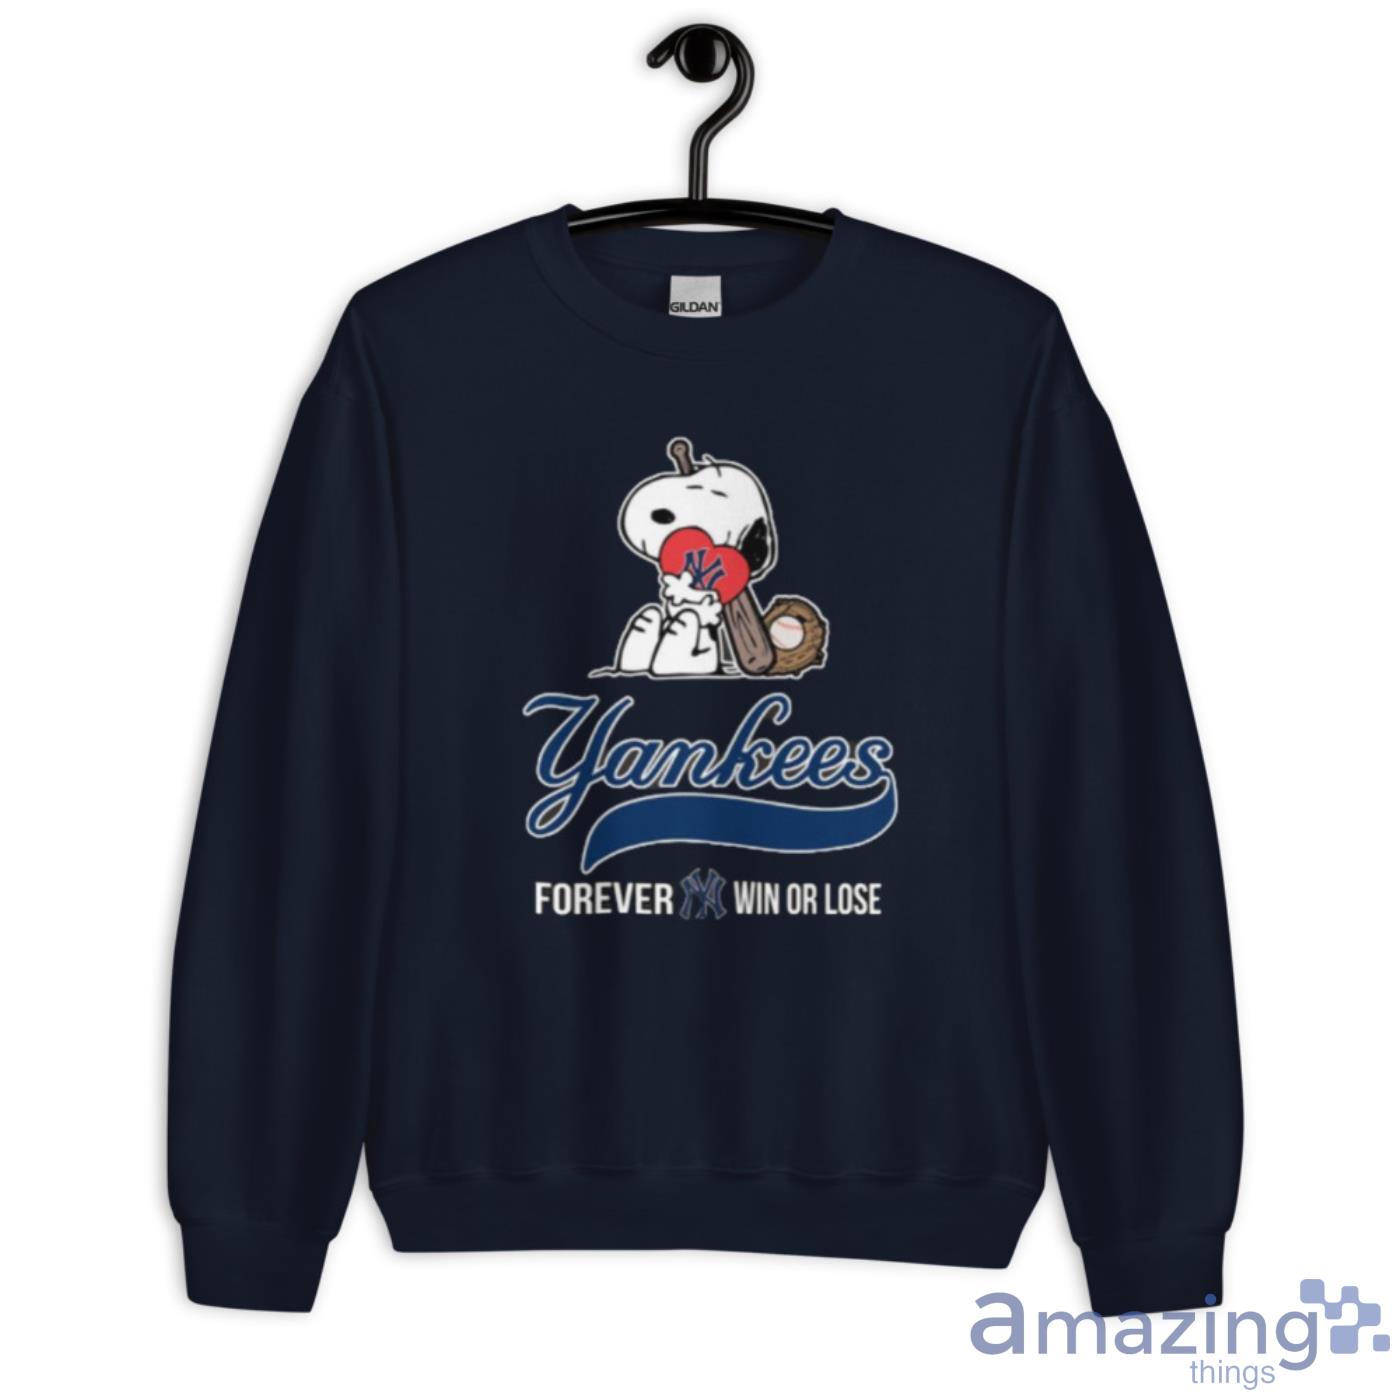 MLB New York Yankees Snoopy Woodstock The Peanuts Movie Baseball T Shirt -  Rookbrand